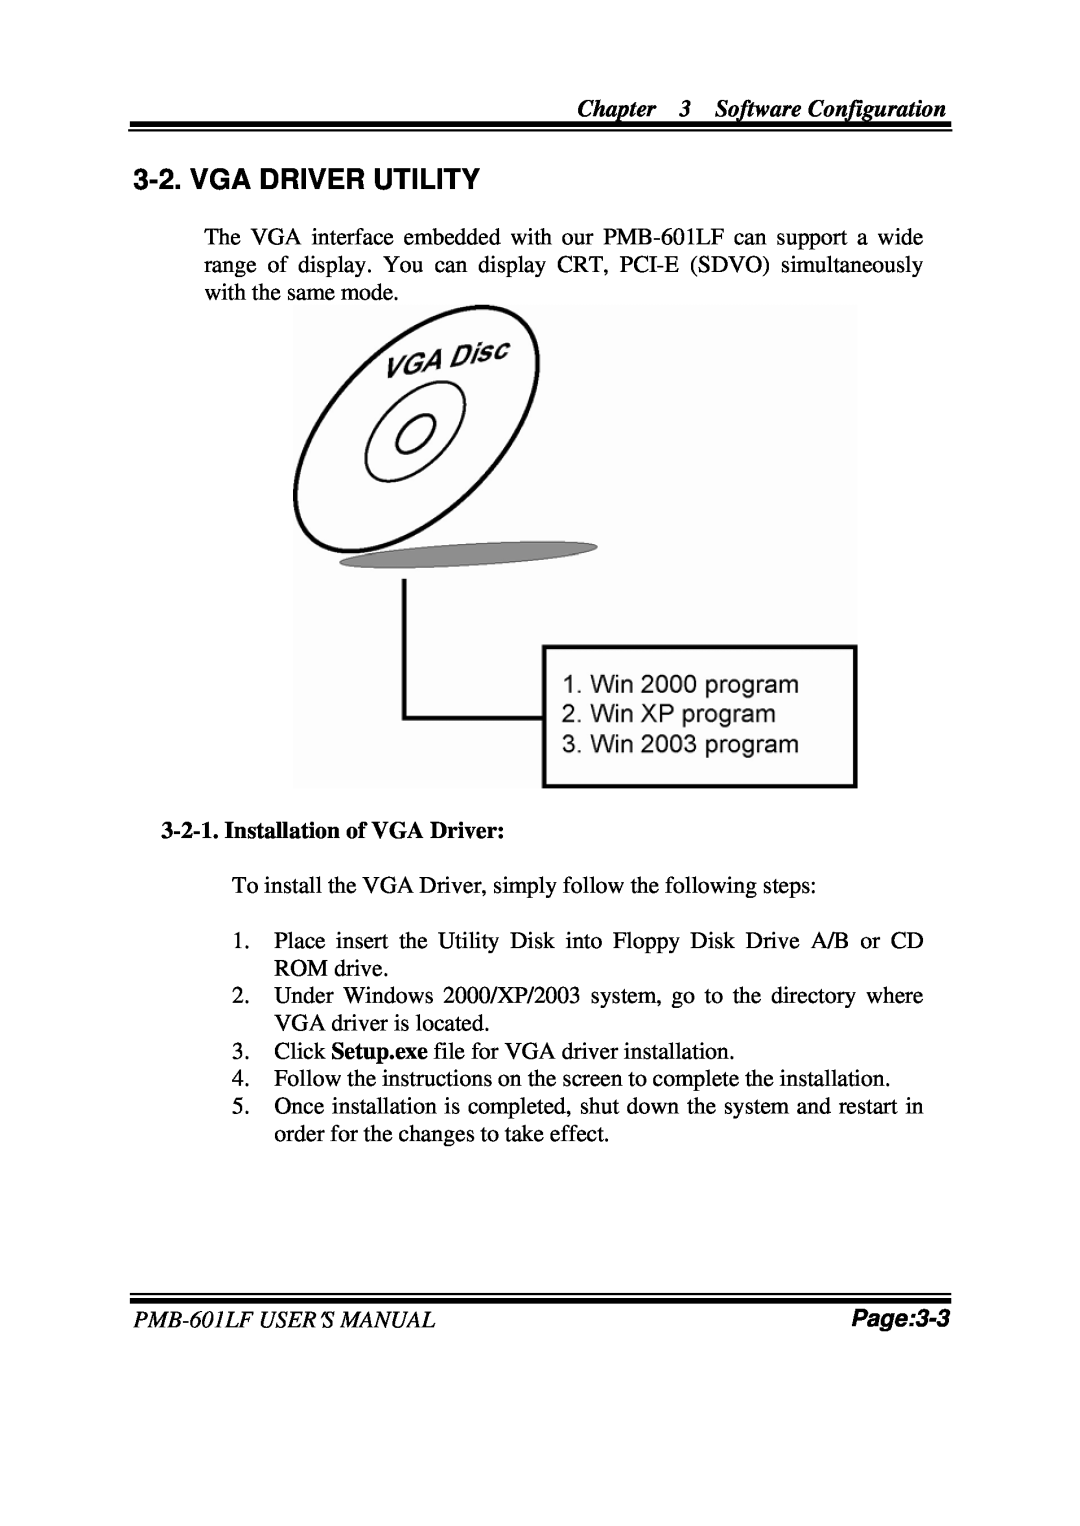 Intel Vga Driver Utility, Installation of VGA Driver, Page:3-3, Software Configuration, PMB-601LFUSER′S MANUAL 